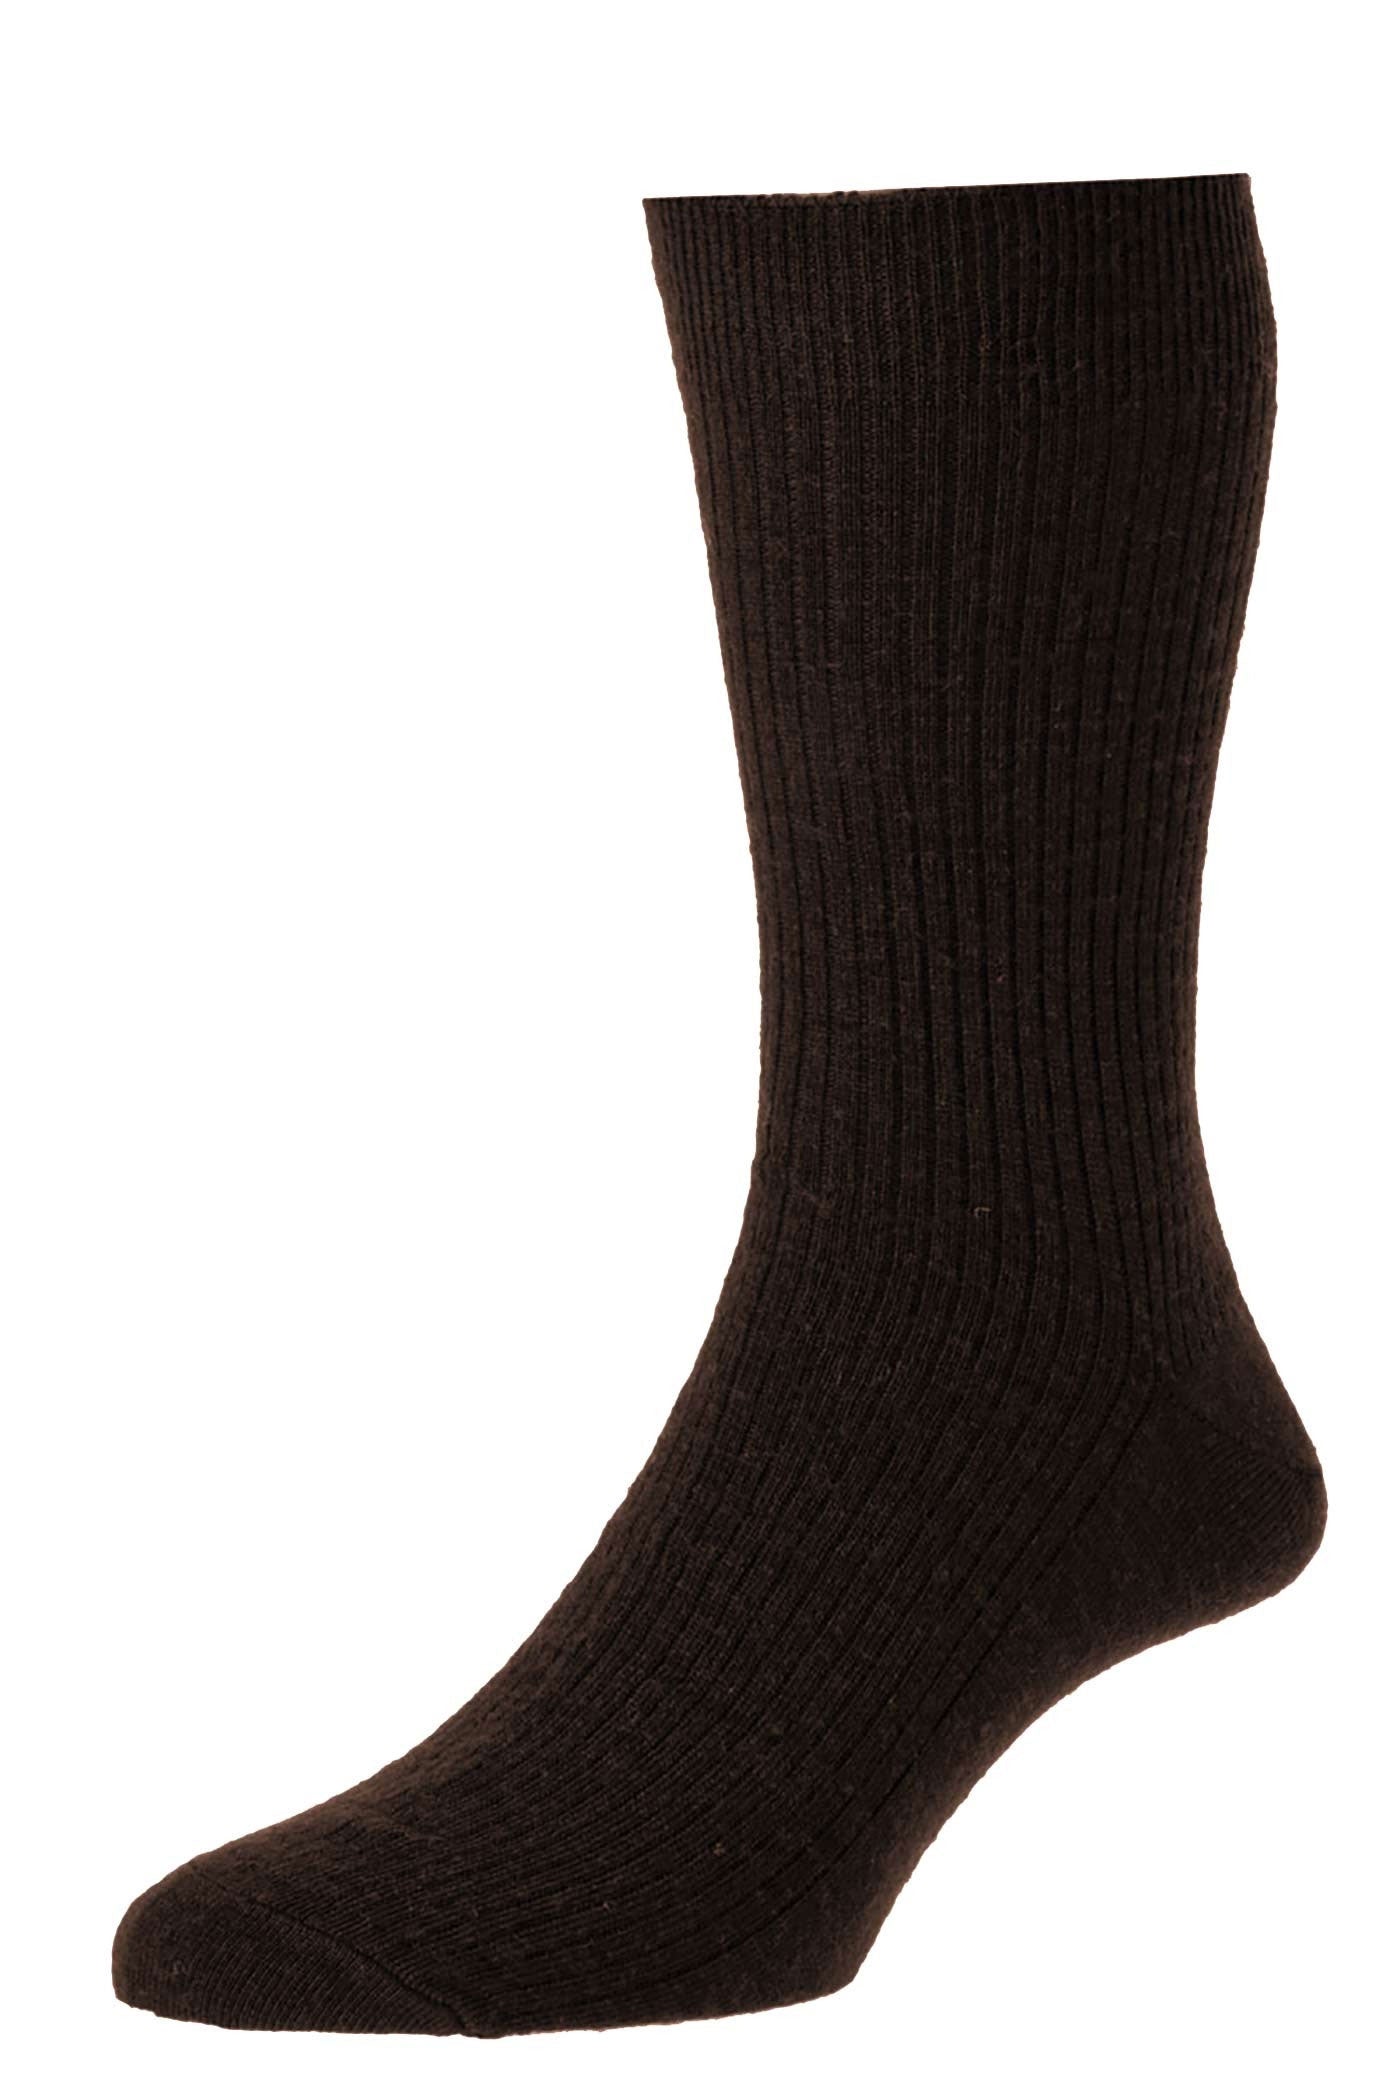 Dark Brown HJ Hall Immaculate Socks | Wool Rich 